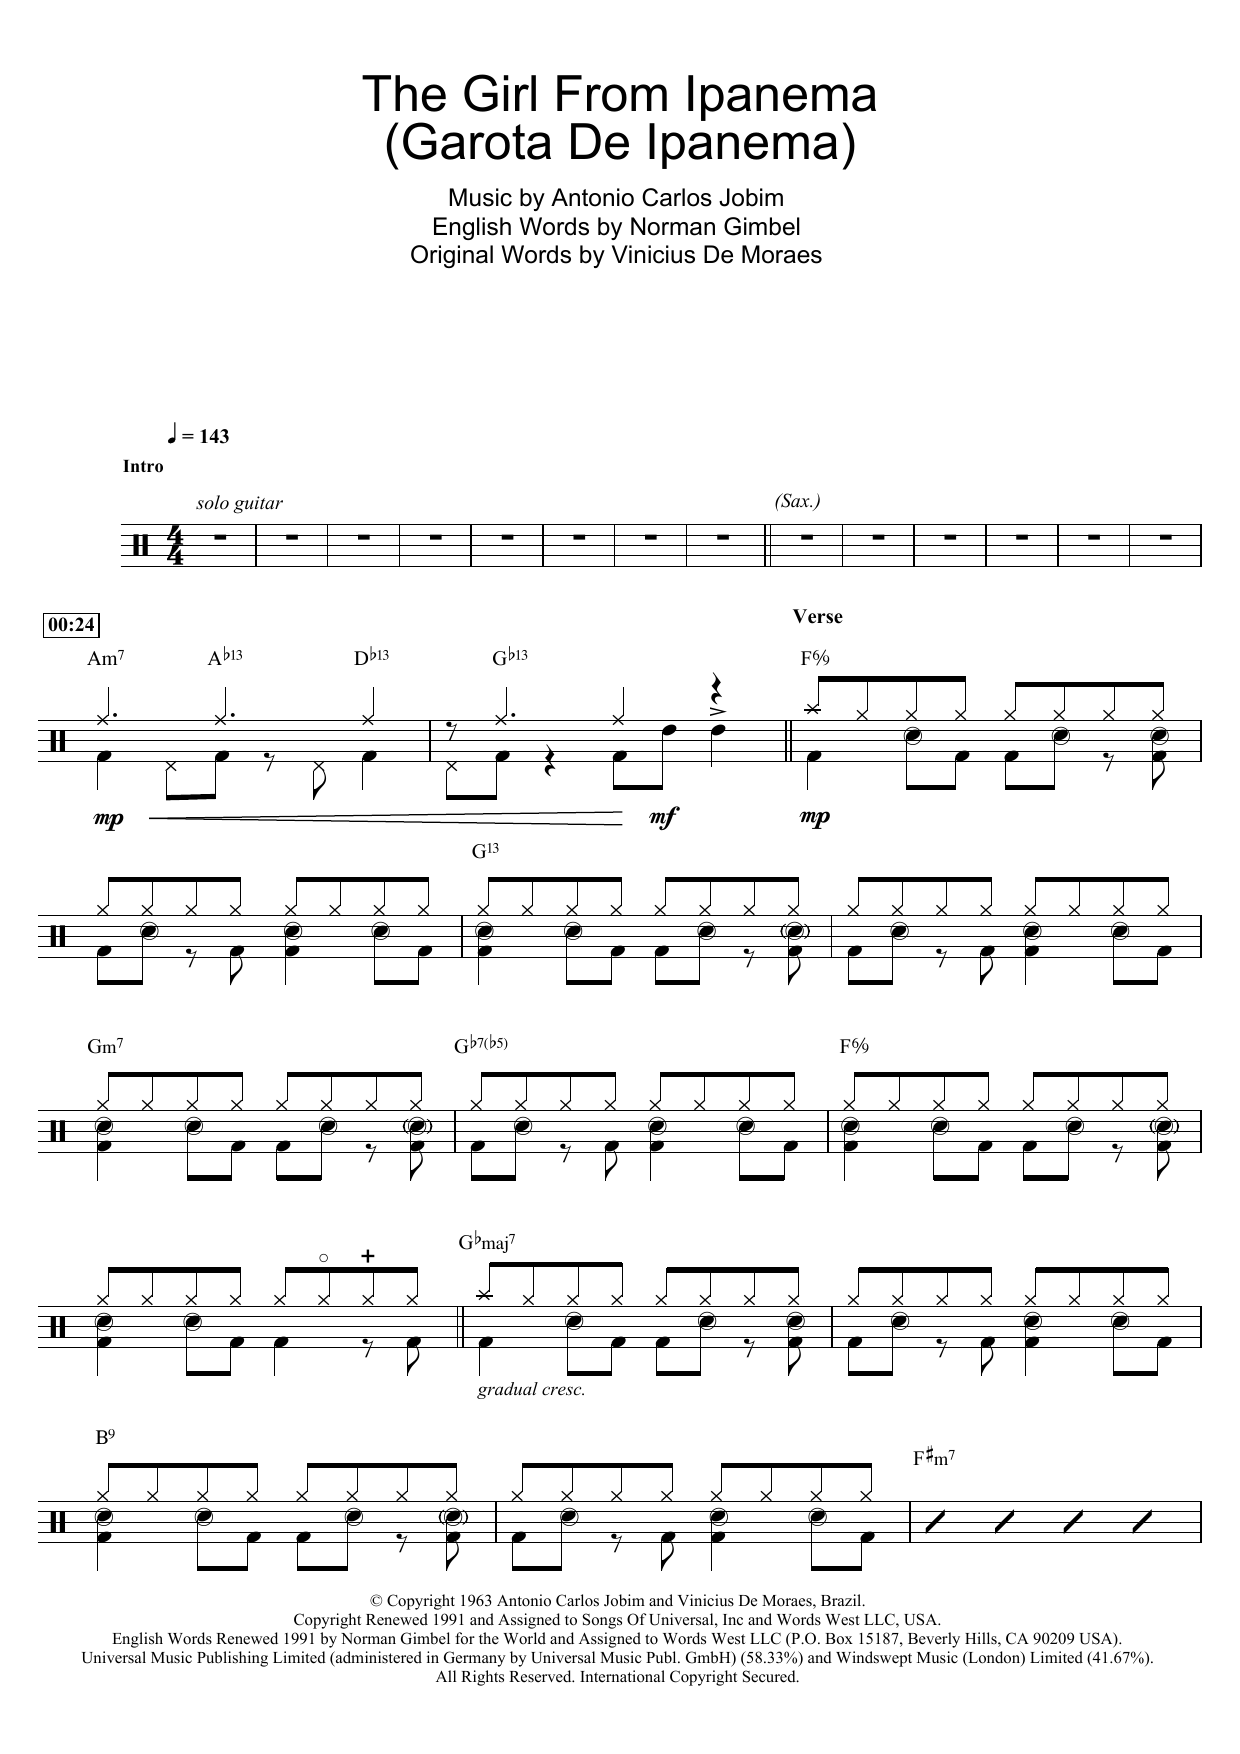 Download Antonio Carlos Jobim The Girl From Ipanema (Garota De Ipanema) Sheet Music and learn how to play Drums PDF digital score in minutes